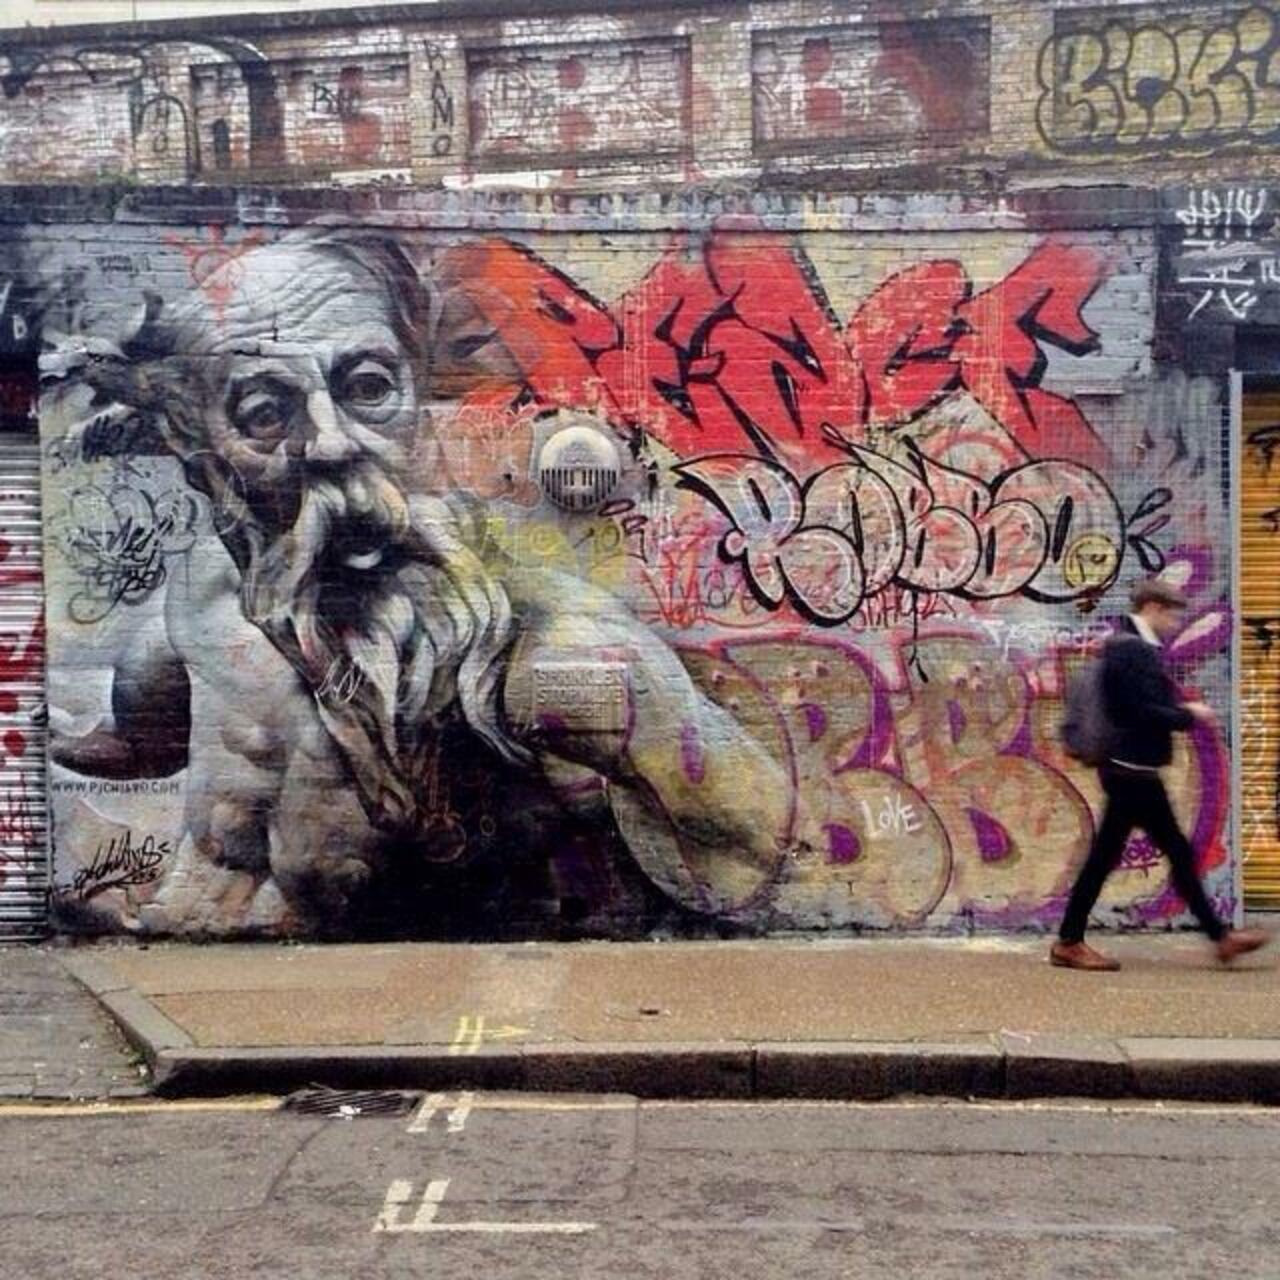 Pichiavo new Street Art wall in Shoreditch, London 

#art #arte #graffiti #streetart http://t.co/VkWq5NyUT9